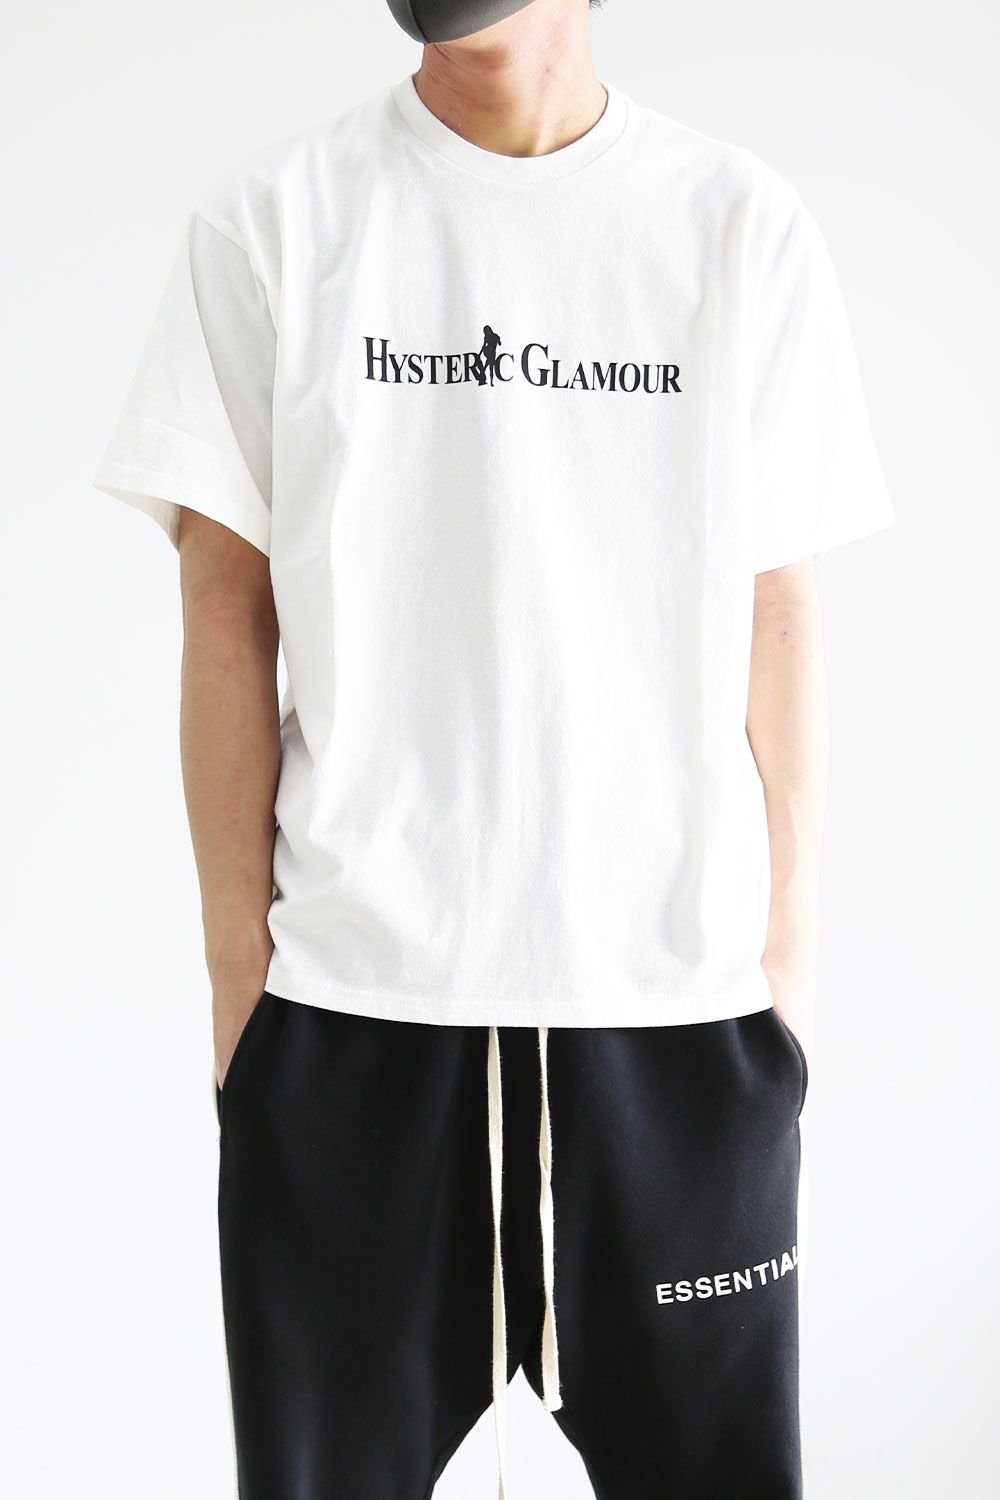 HYSTERIC GLAMOUR - HG LOGOTYPE Tシャツ / ブラック | Tempt